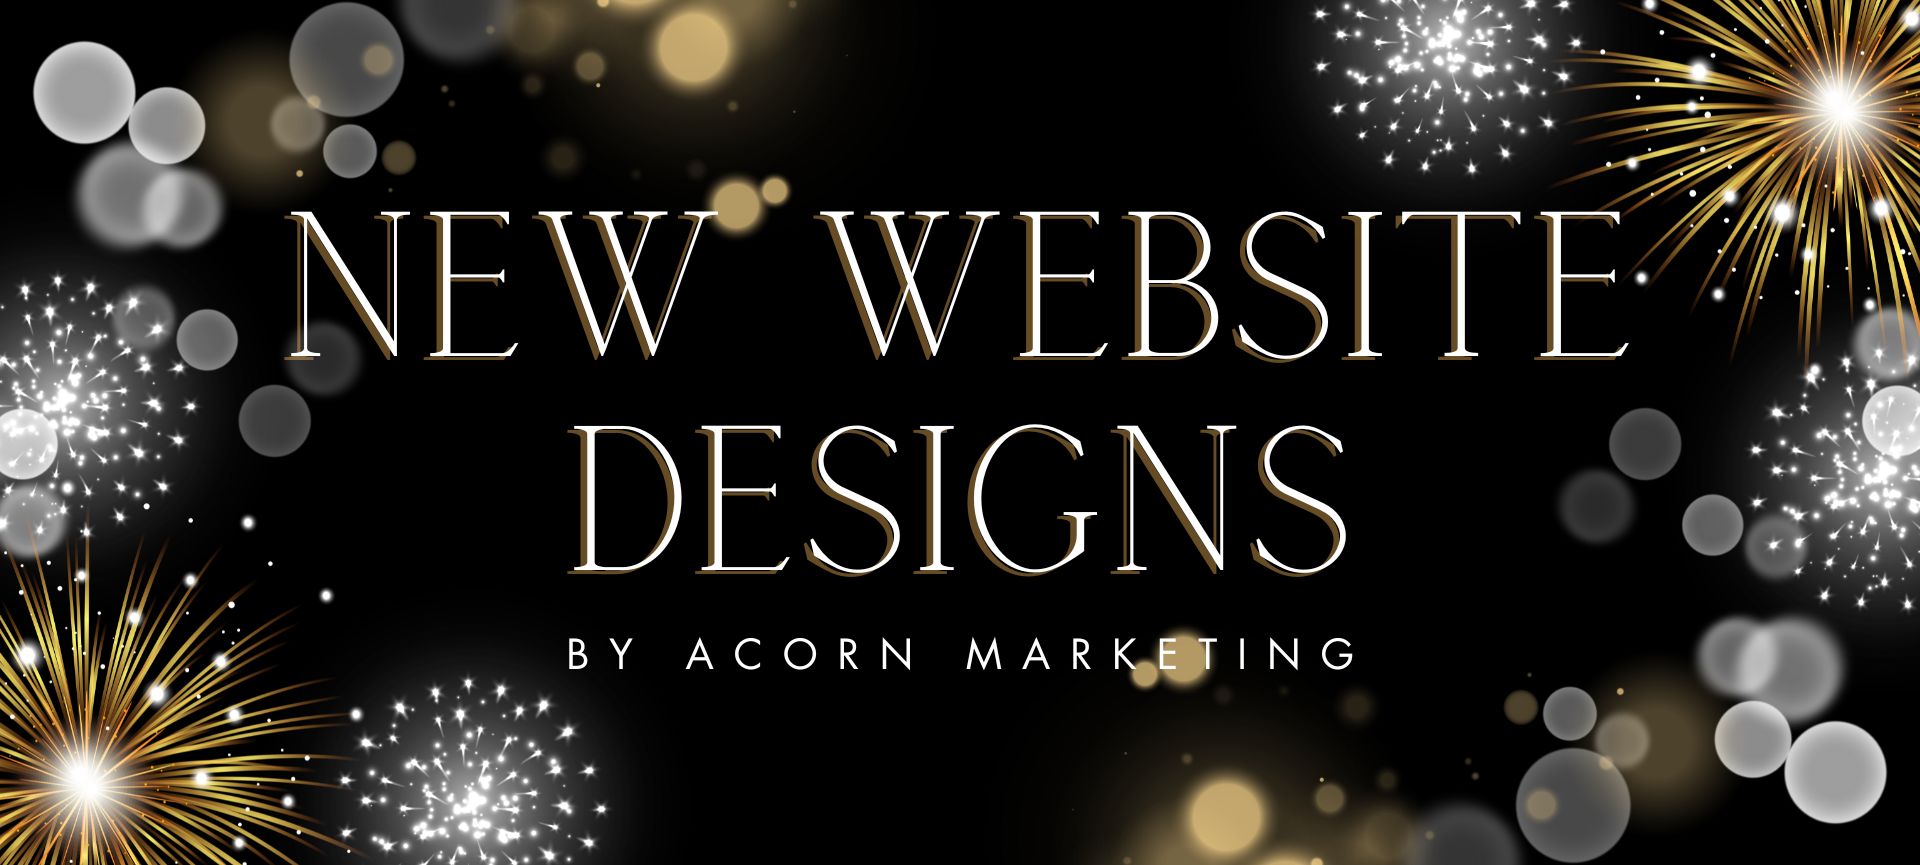 New website designs by Acorn Marketing - January 2024